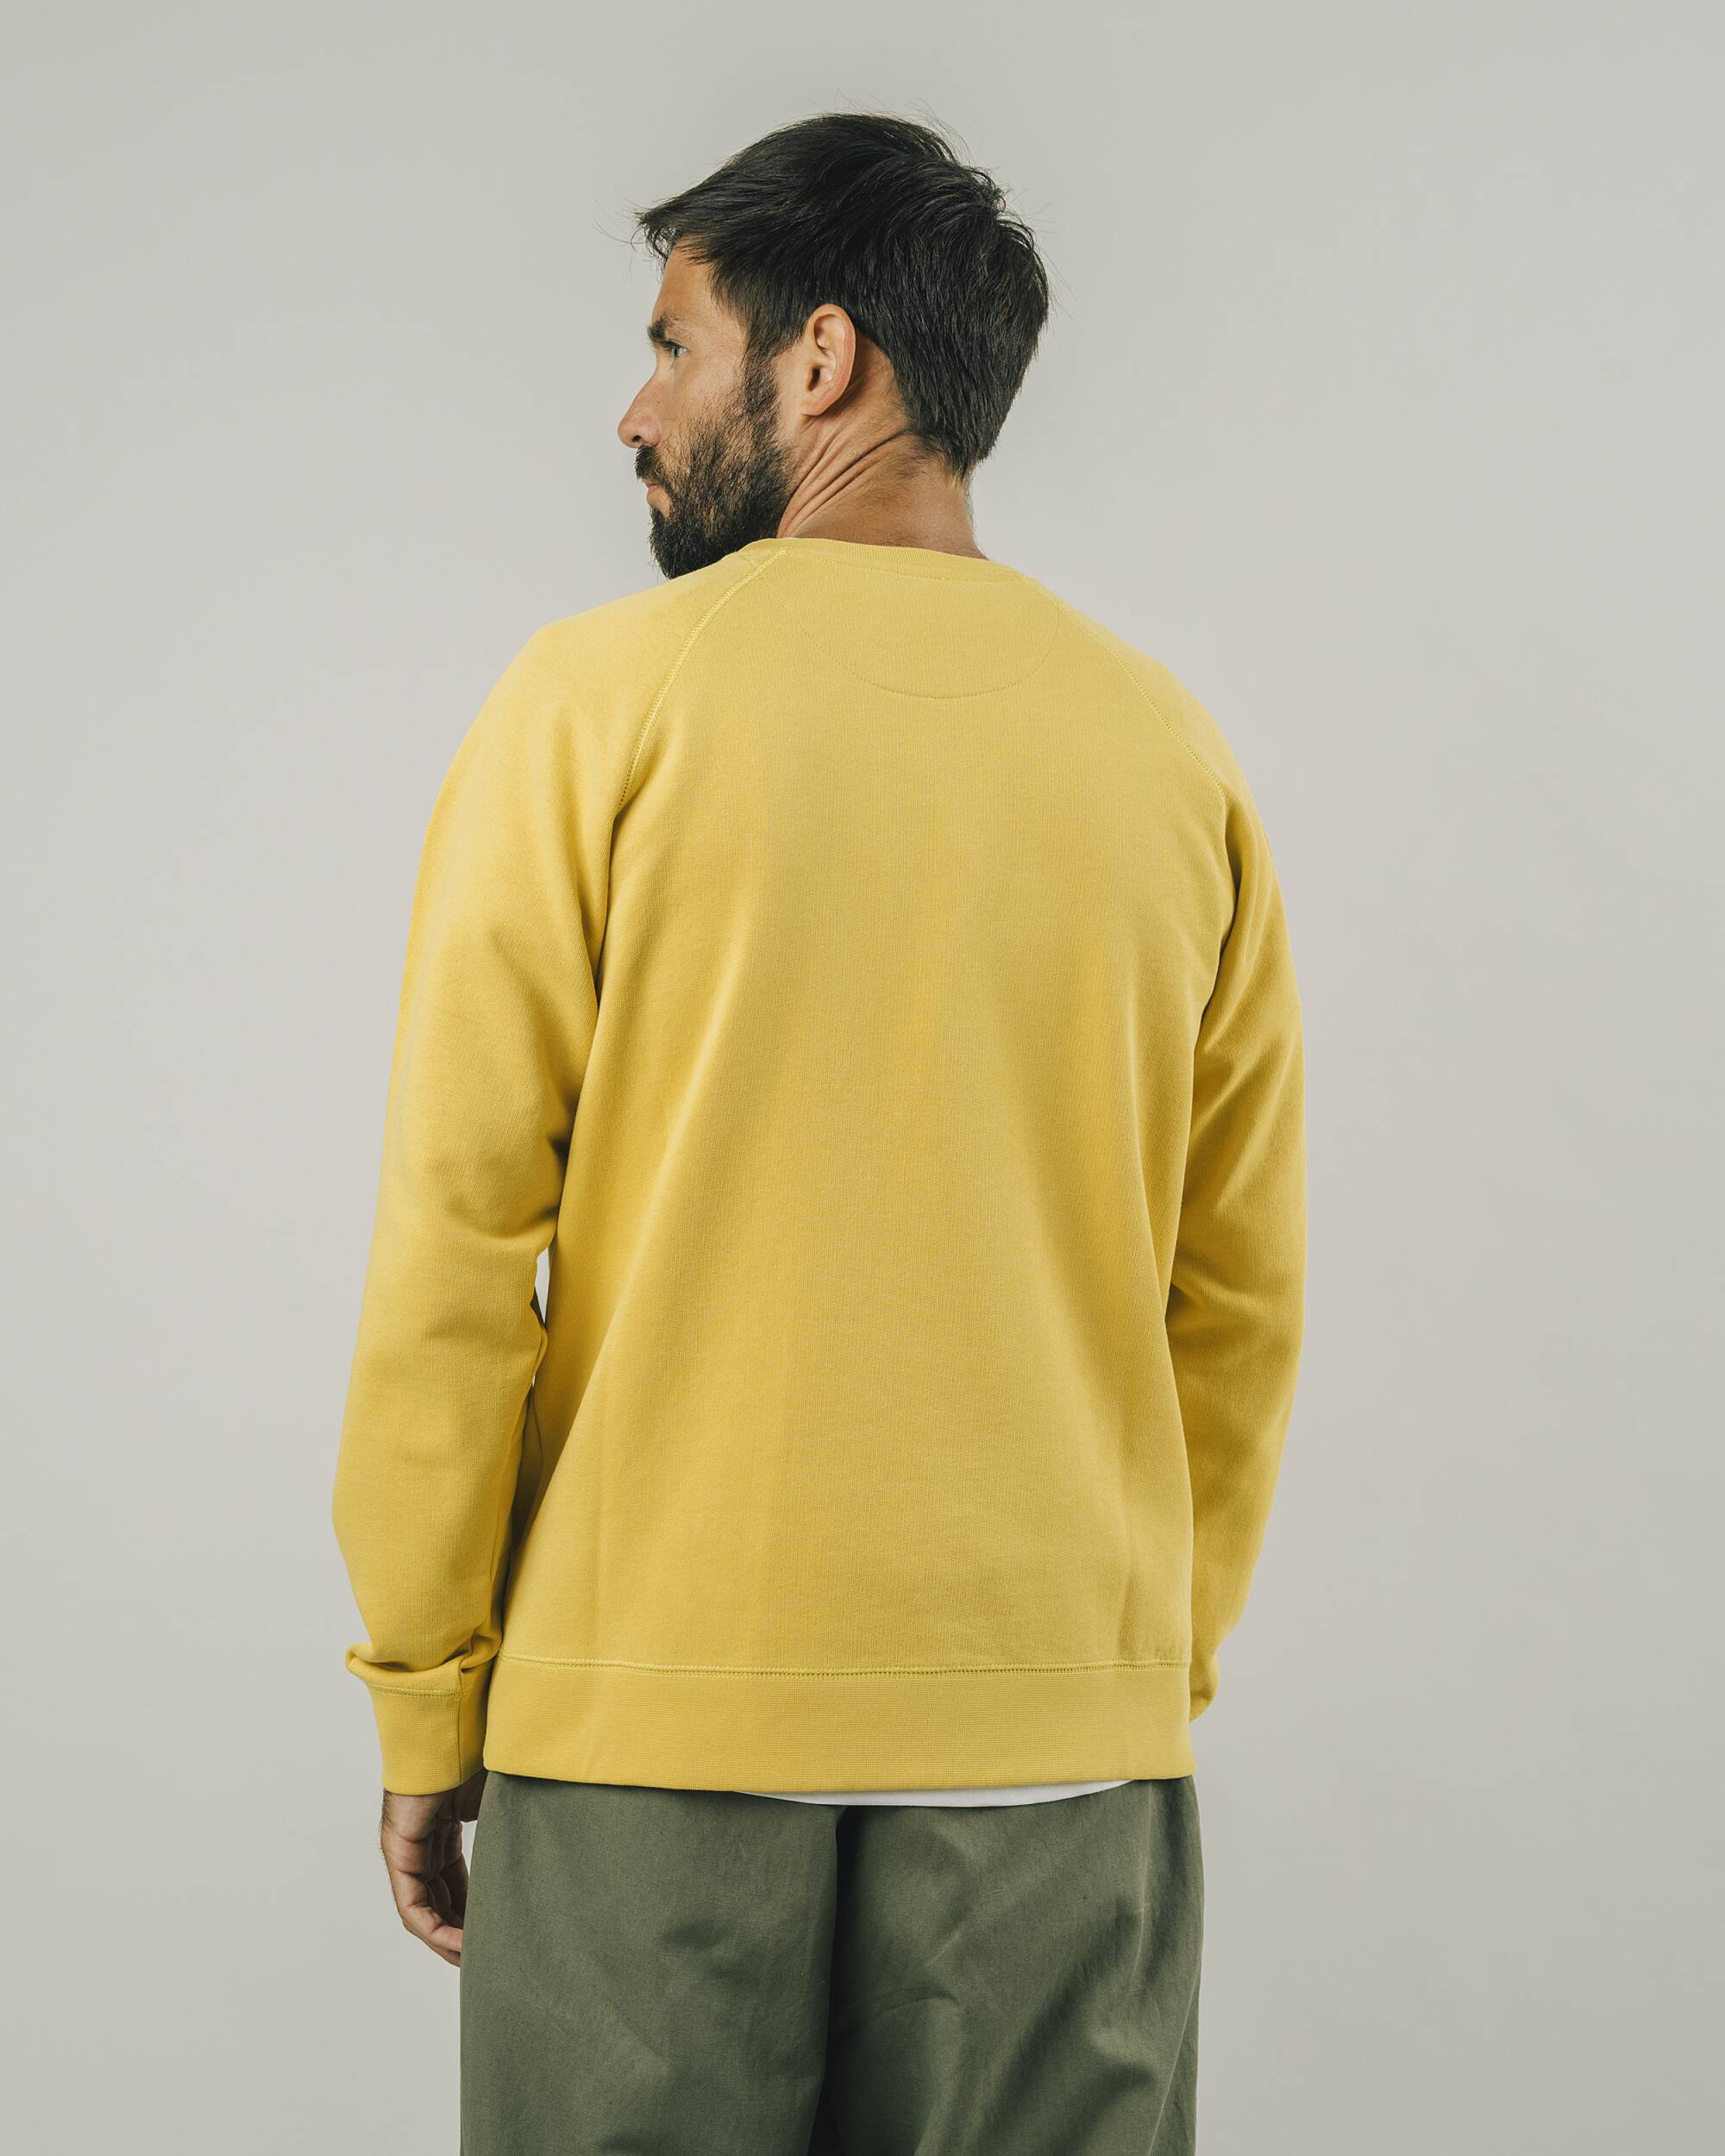 Yellow sweater Ufo Catcher made of 100% organic cotton from Brava Fabrics